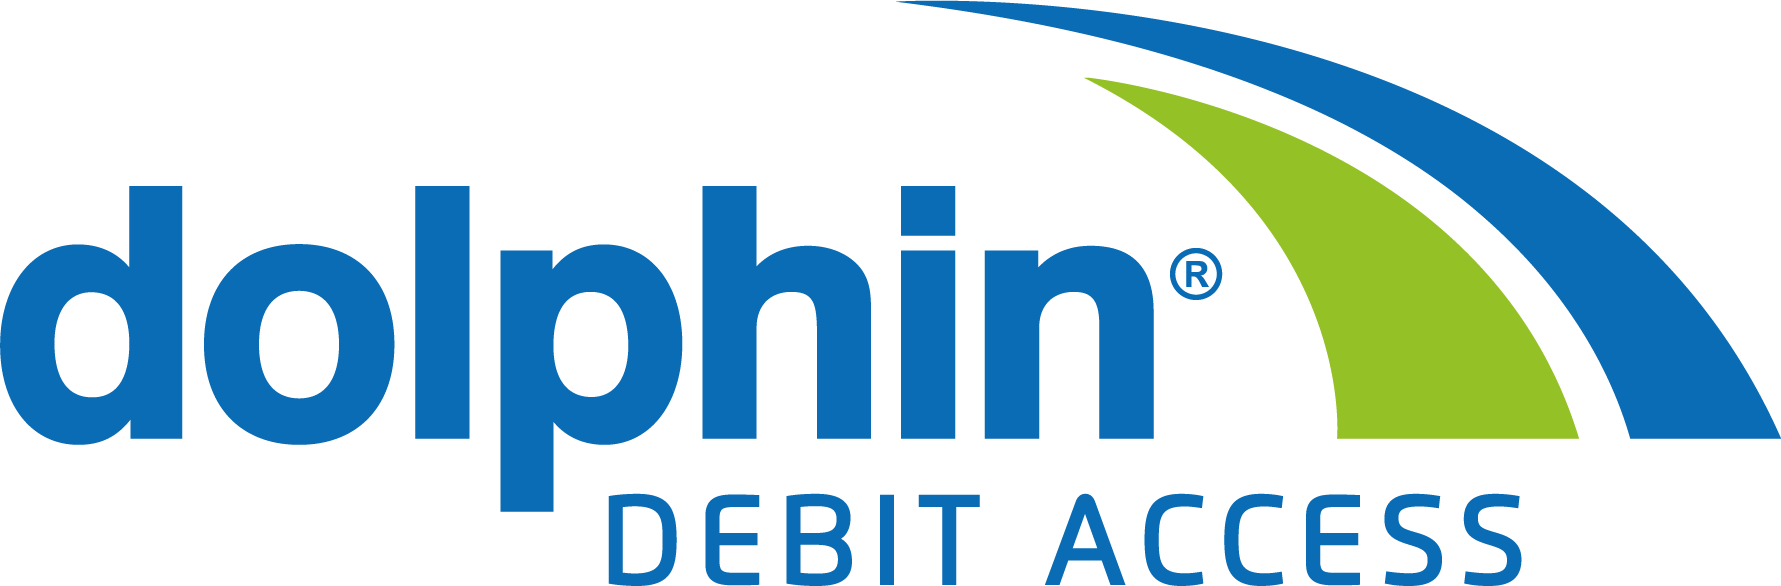 Dolphin Debit Access